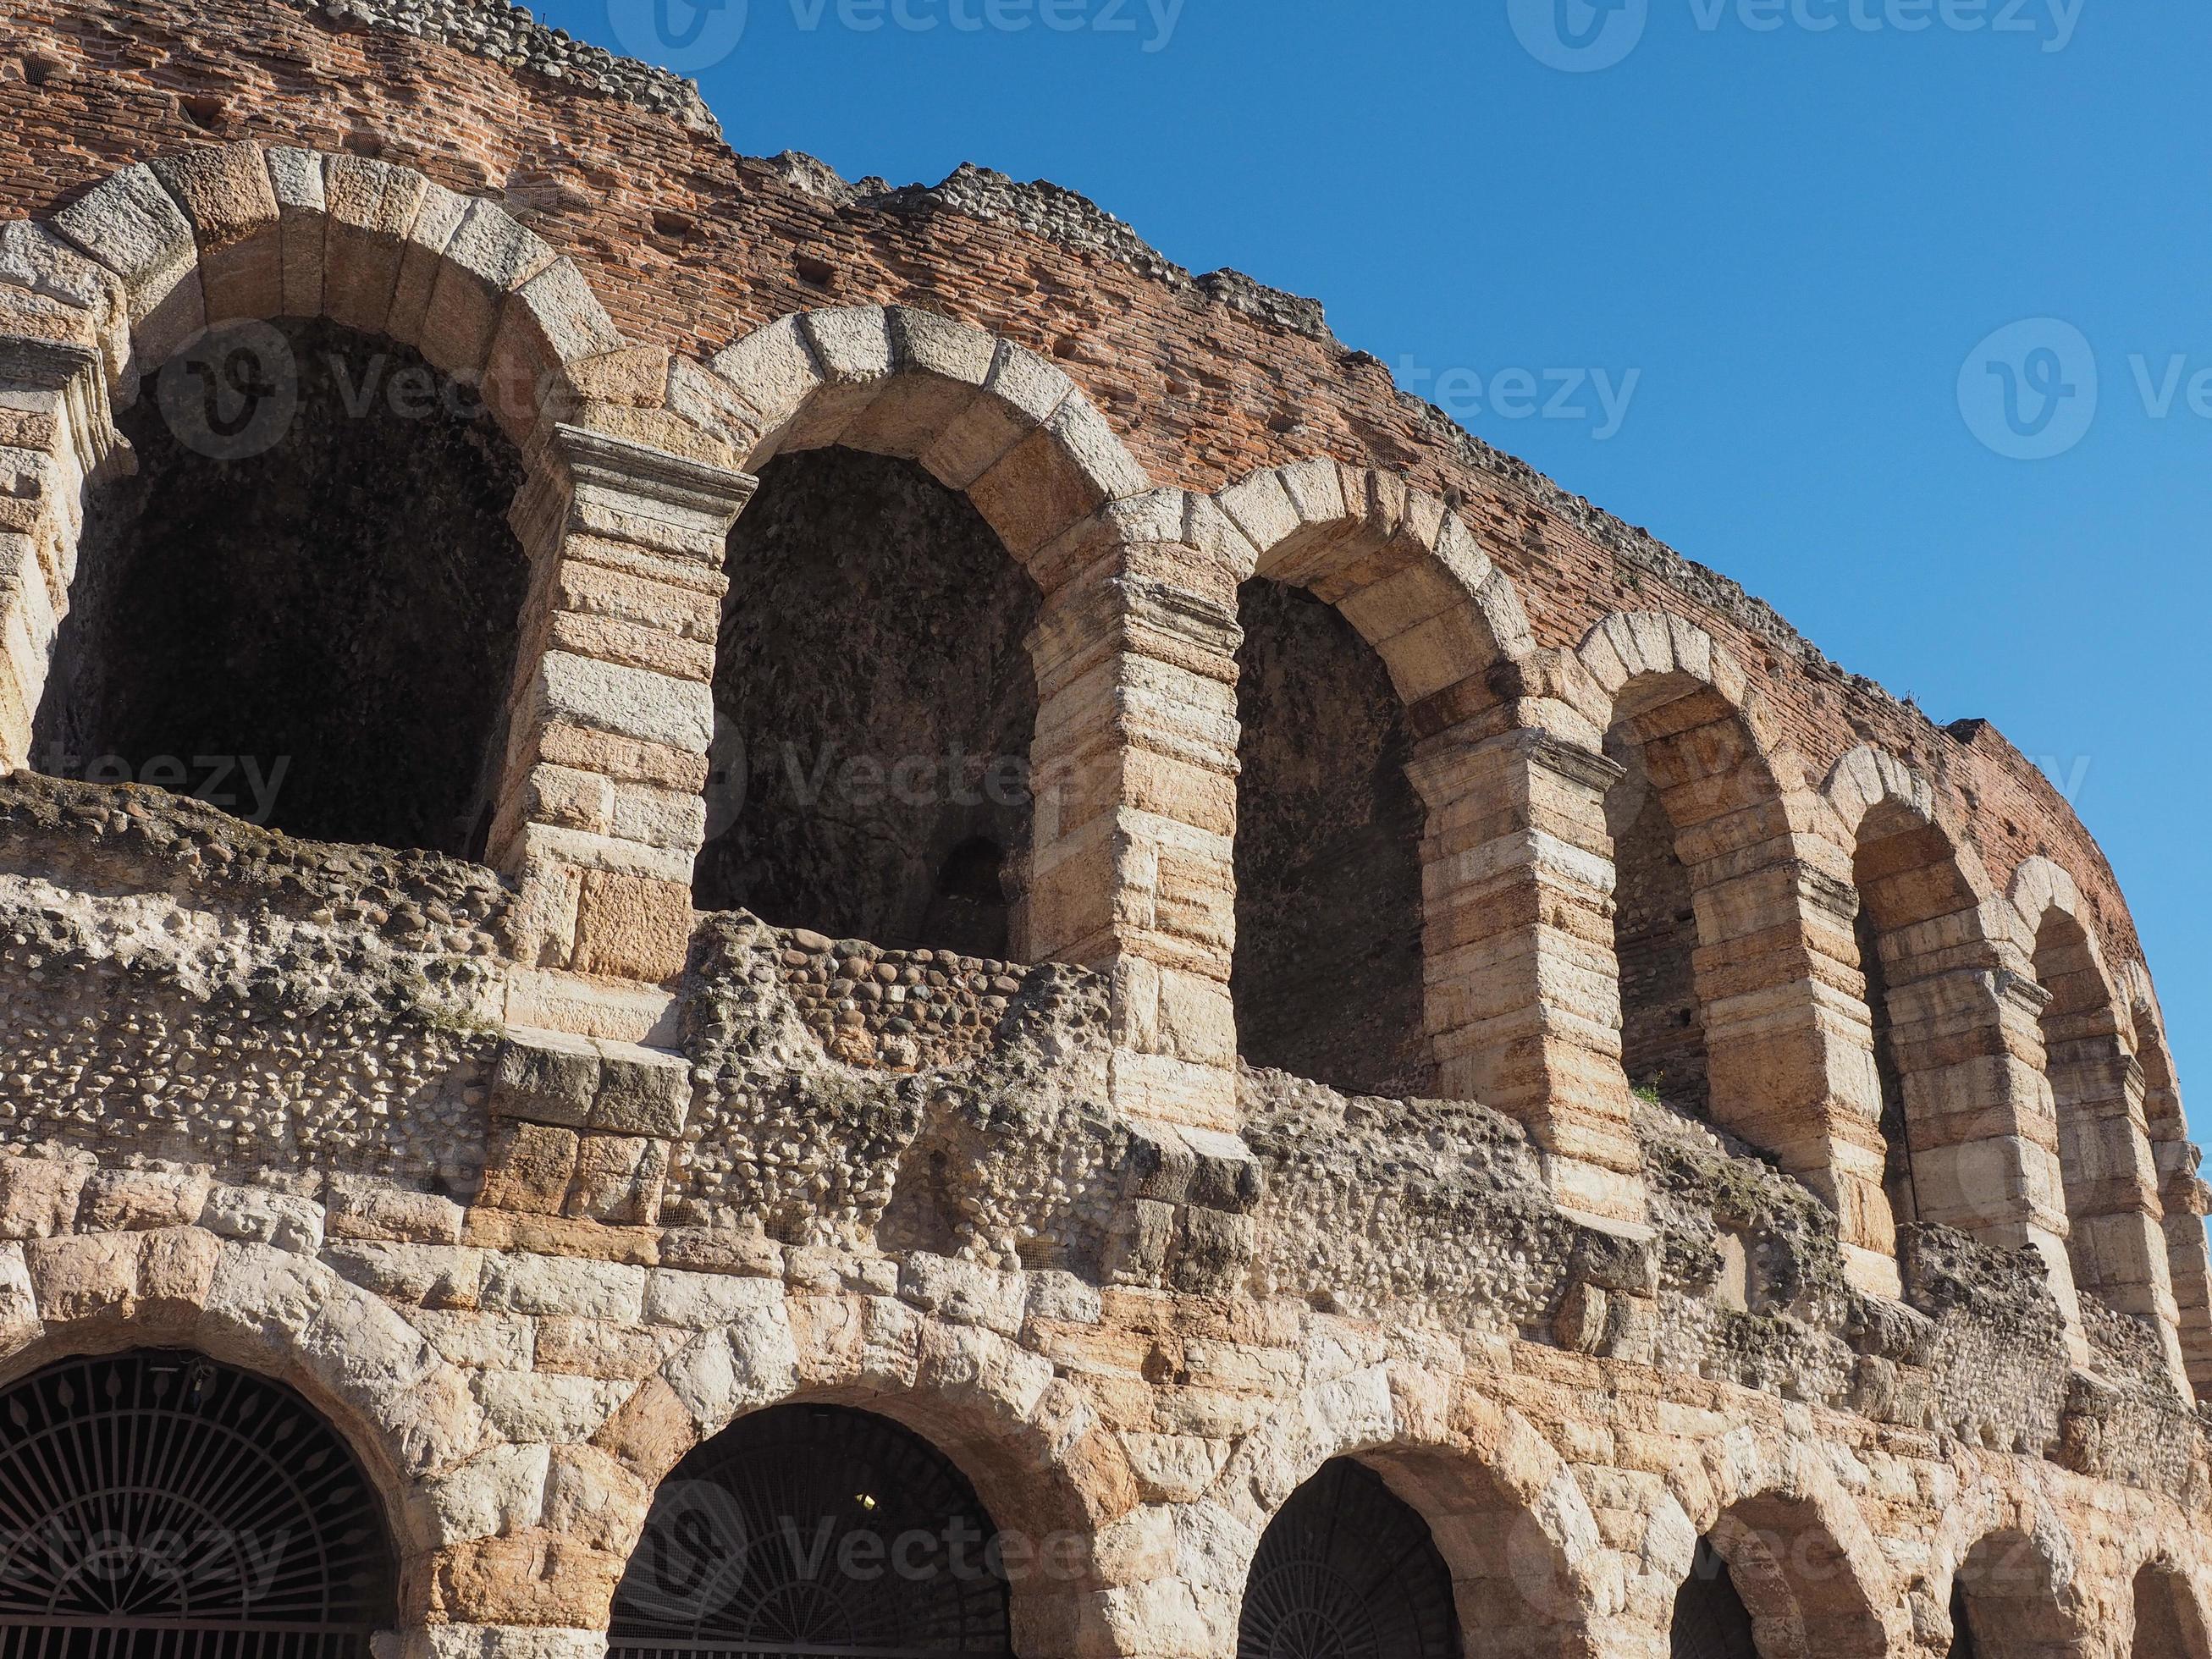 anfiteatro romano verona arena foto